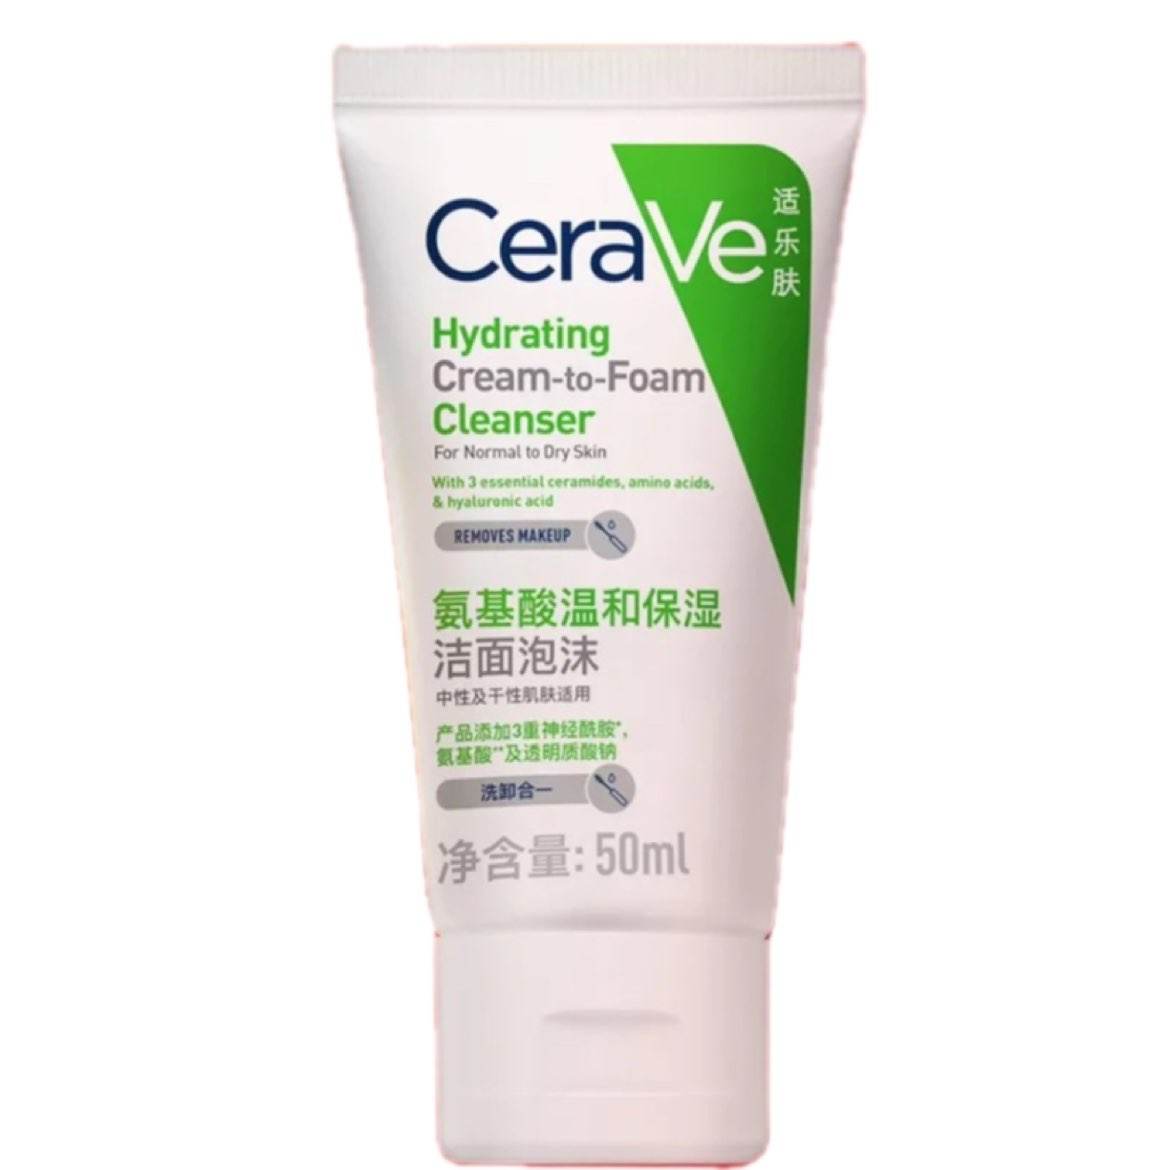 CeraVe适乐肤 绿氨泡泡洁面洗卸合一 50ml（会员加赠洗脸巾30抽） 31元